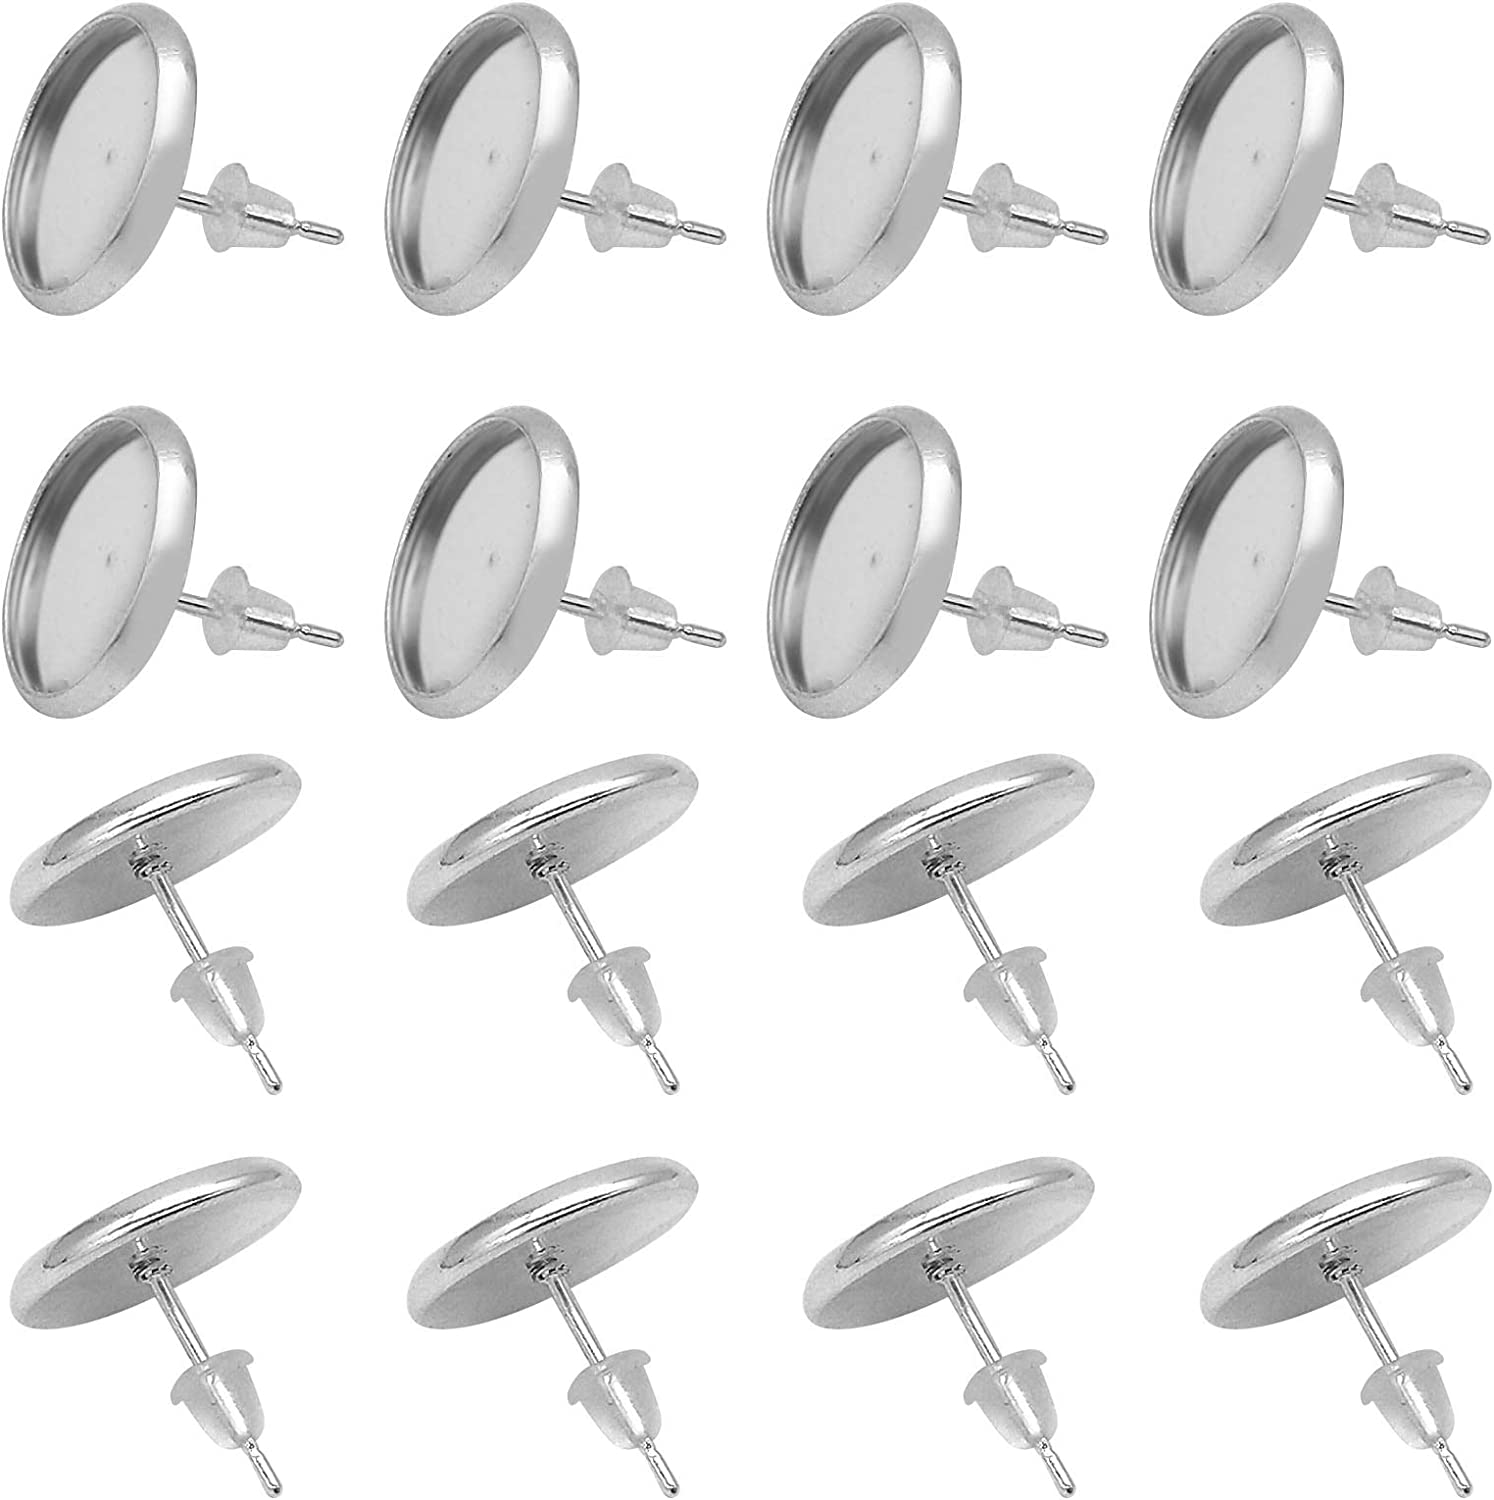 Blank Stud Earring Bezel Silver,200Pcs Stud Earring Kit Includes 100Pcs Cup Post Earrings and 100Pcs Rubber Earring Backs for DIY Jewelry Findings,Earring Making Supplies - image 1 of 5